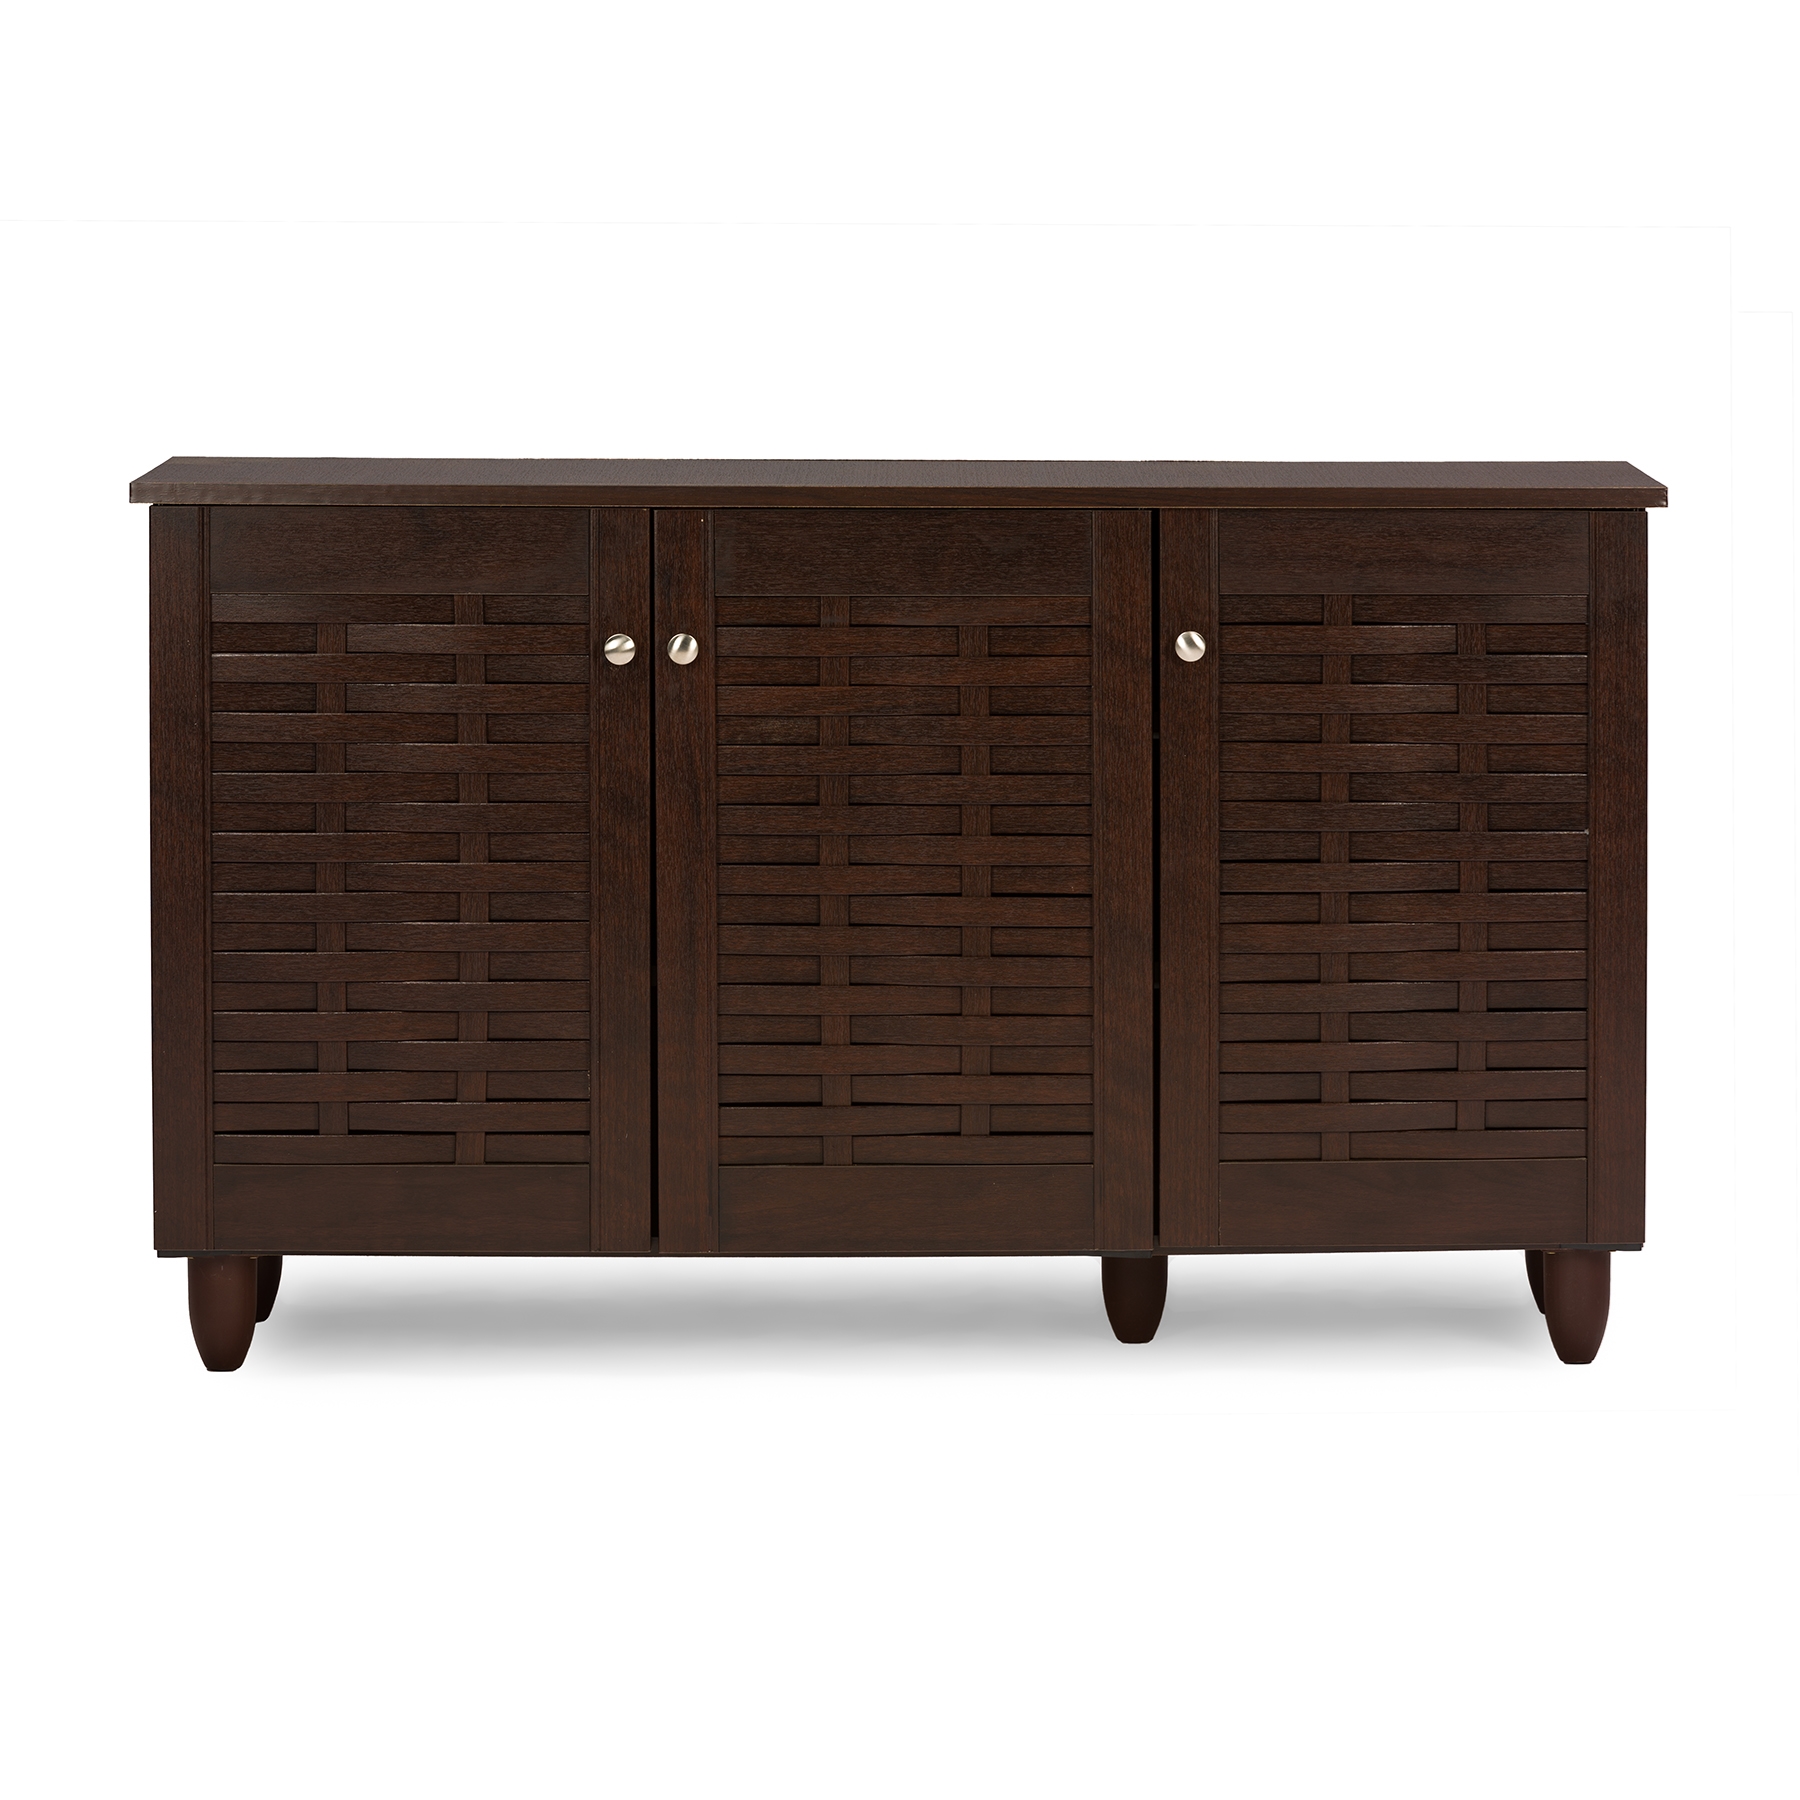 Timber Art Design Storage Cabinet 3 Door Cupboard Wenge Hallway Organiser Furniture Unit 